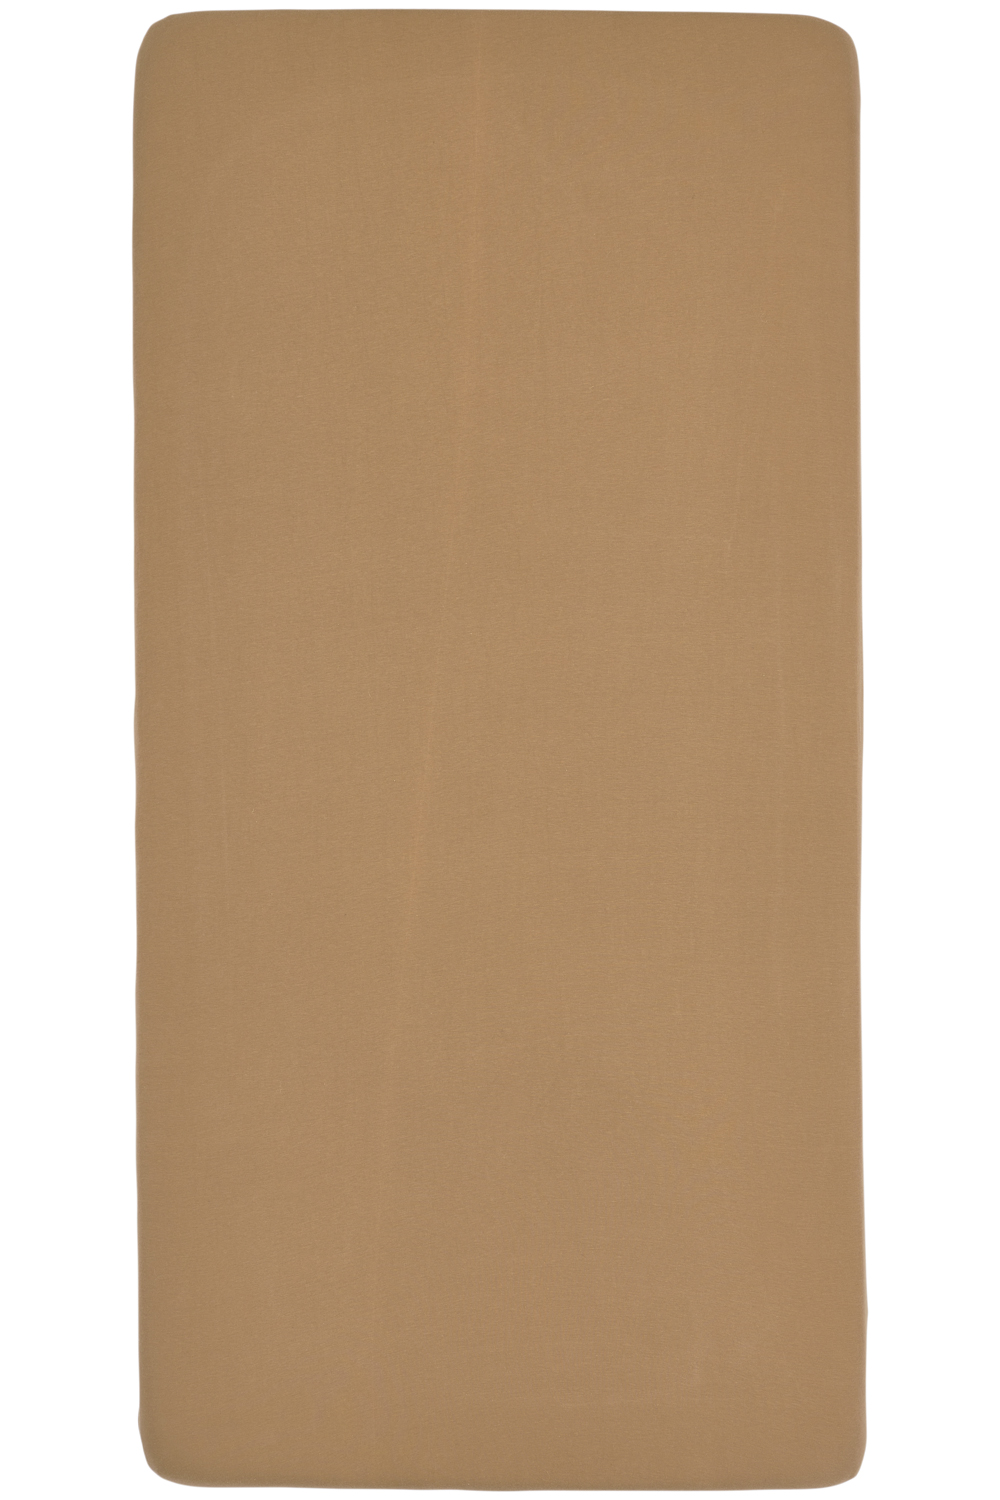 Fitted sheet crib Uni - toffee - 40x80/90cm